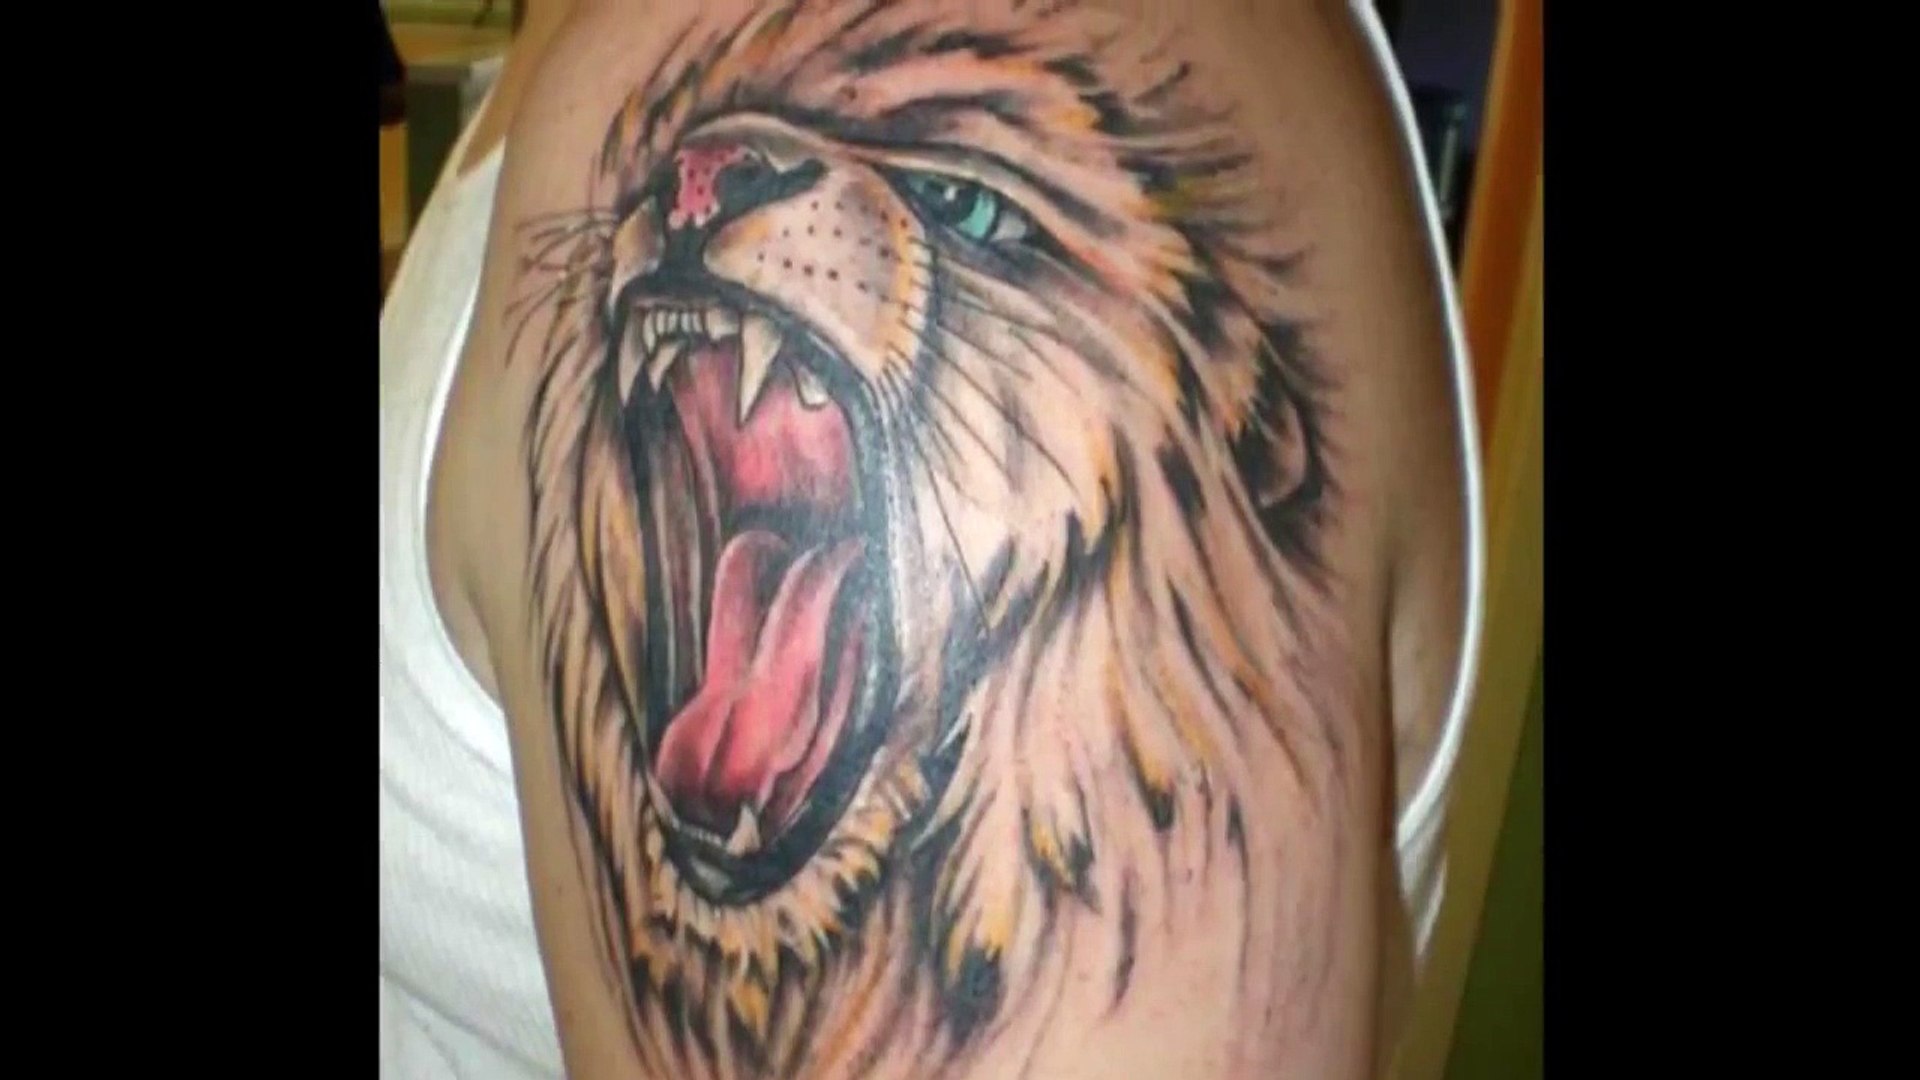 Lion Tattoos Tattoo Desings Pics Tattoos Photos Video Dailymotion 700 x 700 jpeg 53 kb. lion tattoos tattoo desings pics tattoos photos